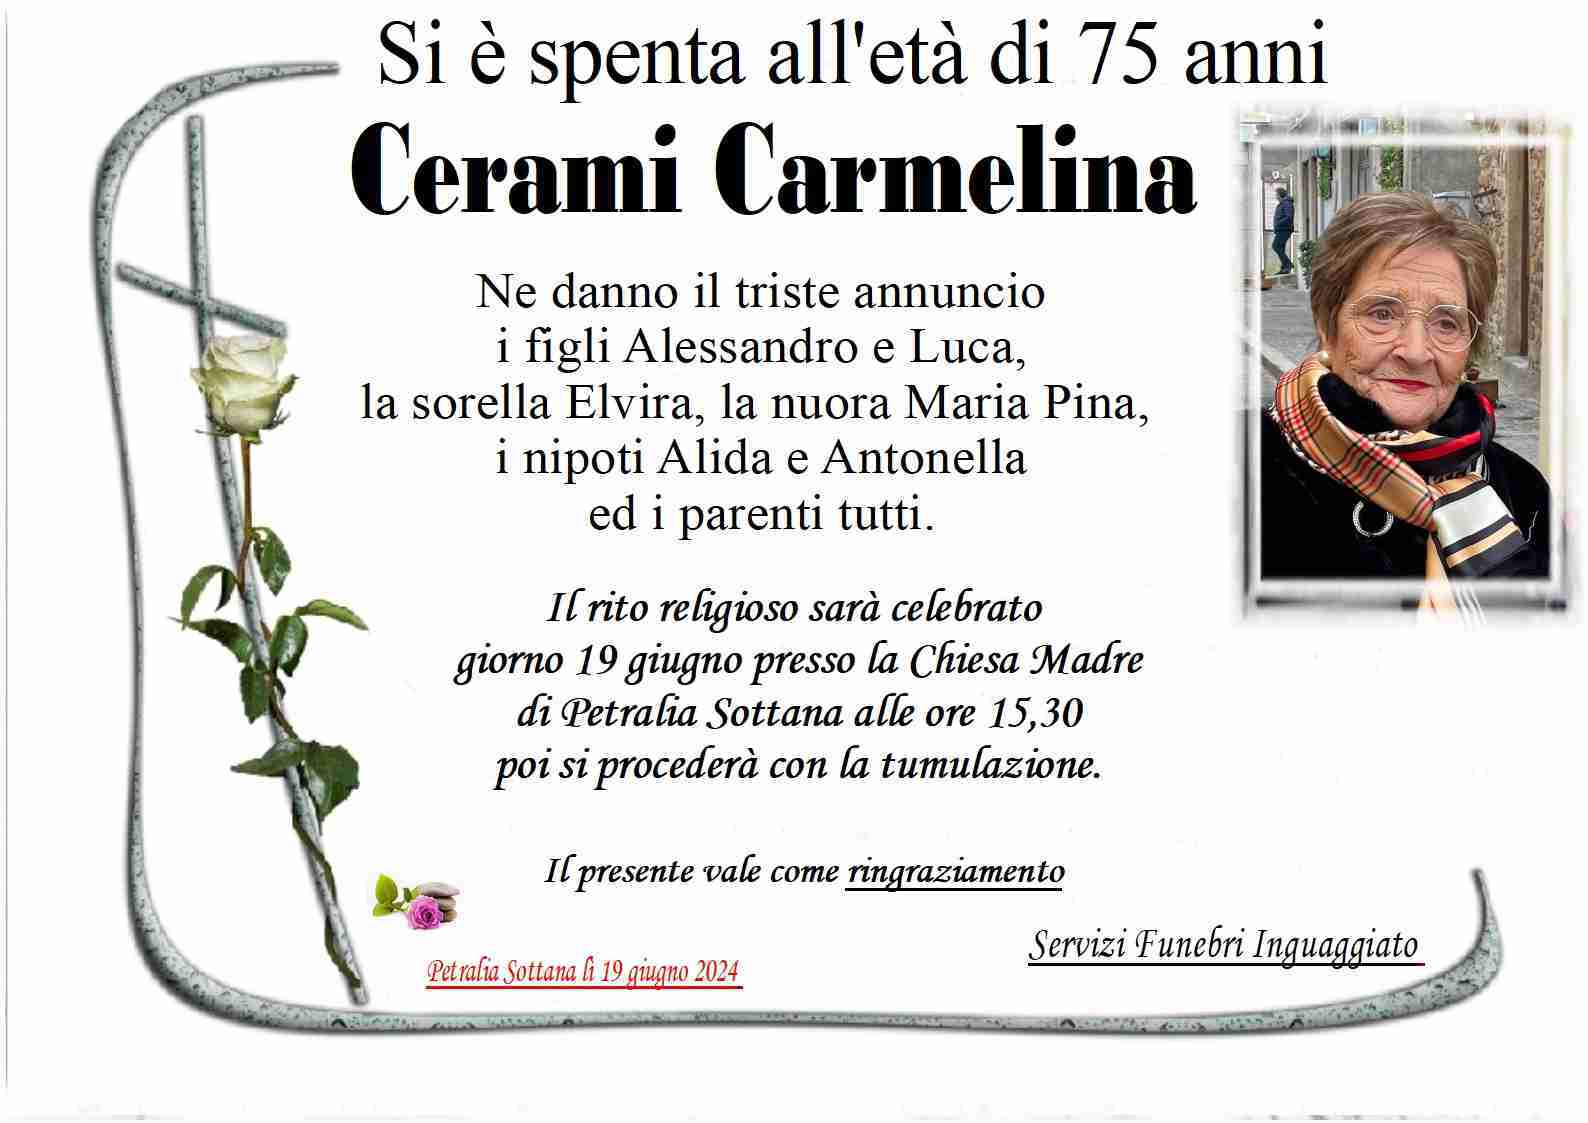 Carmelina Cerami